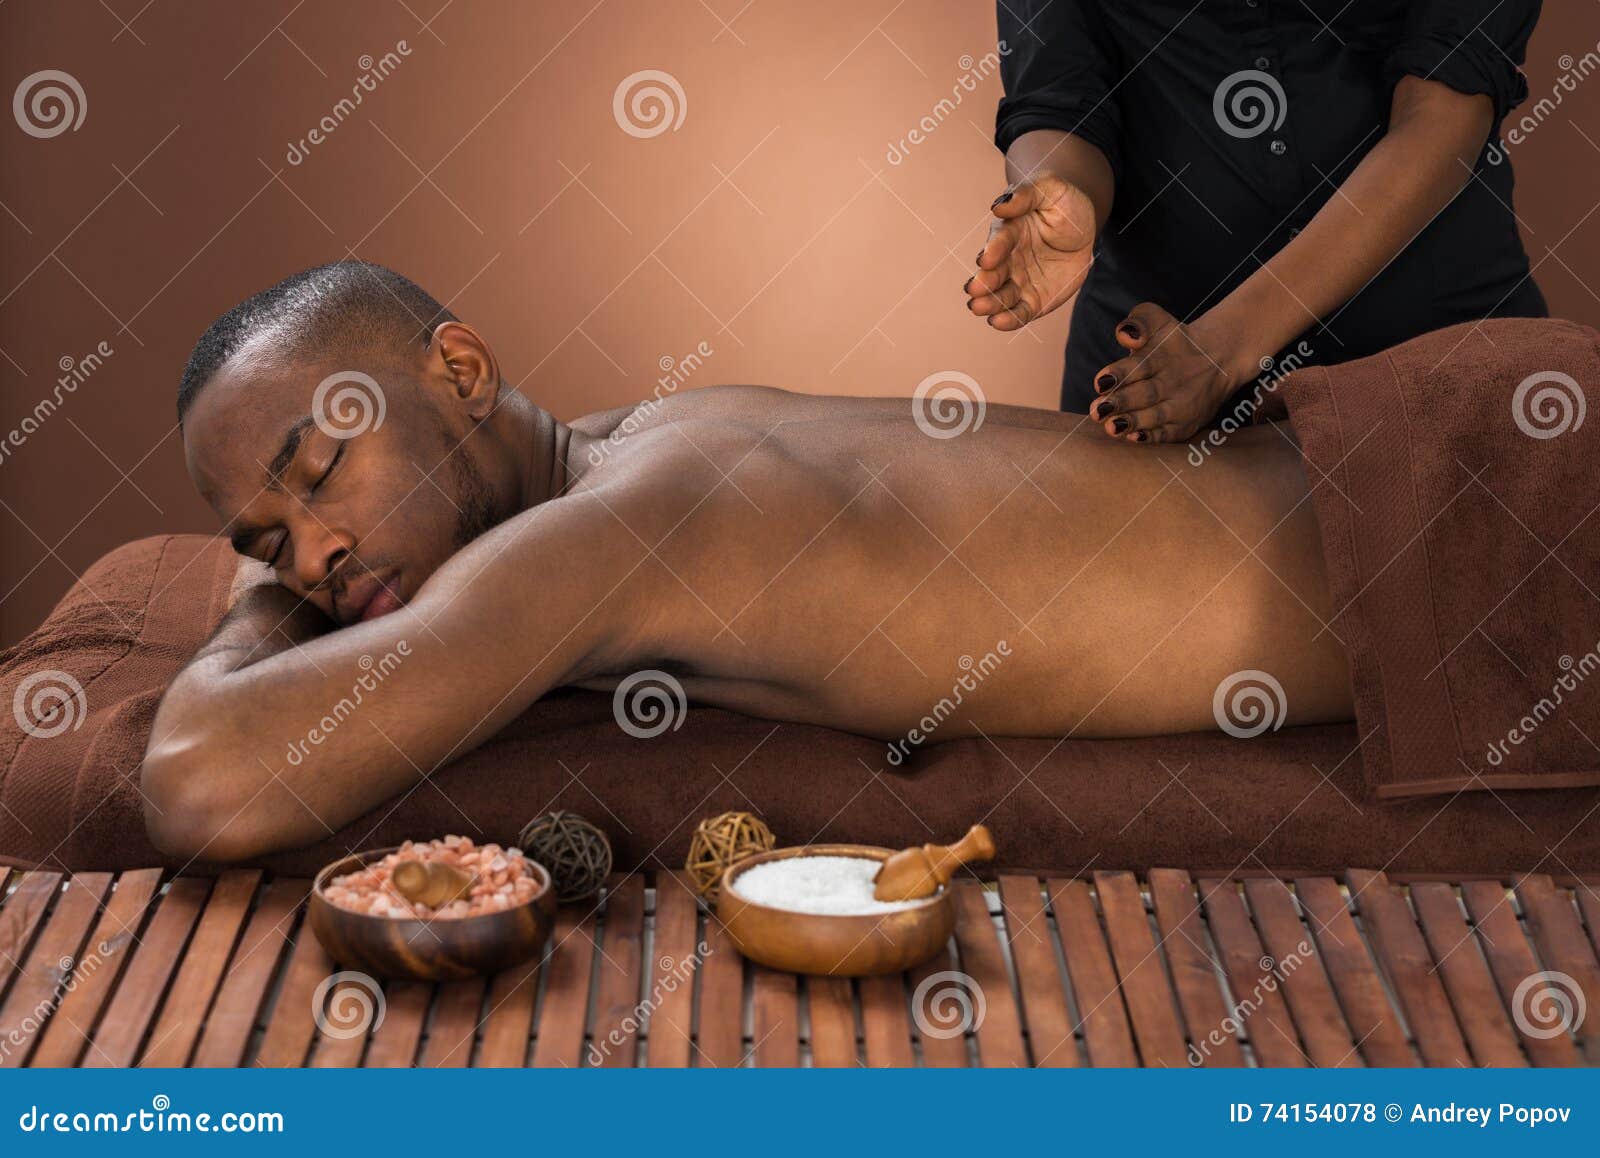 man getting massage in spa